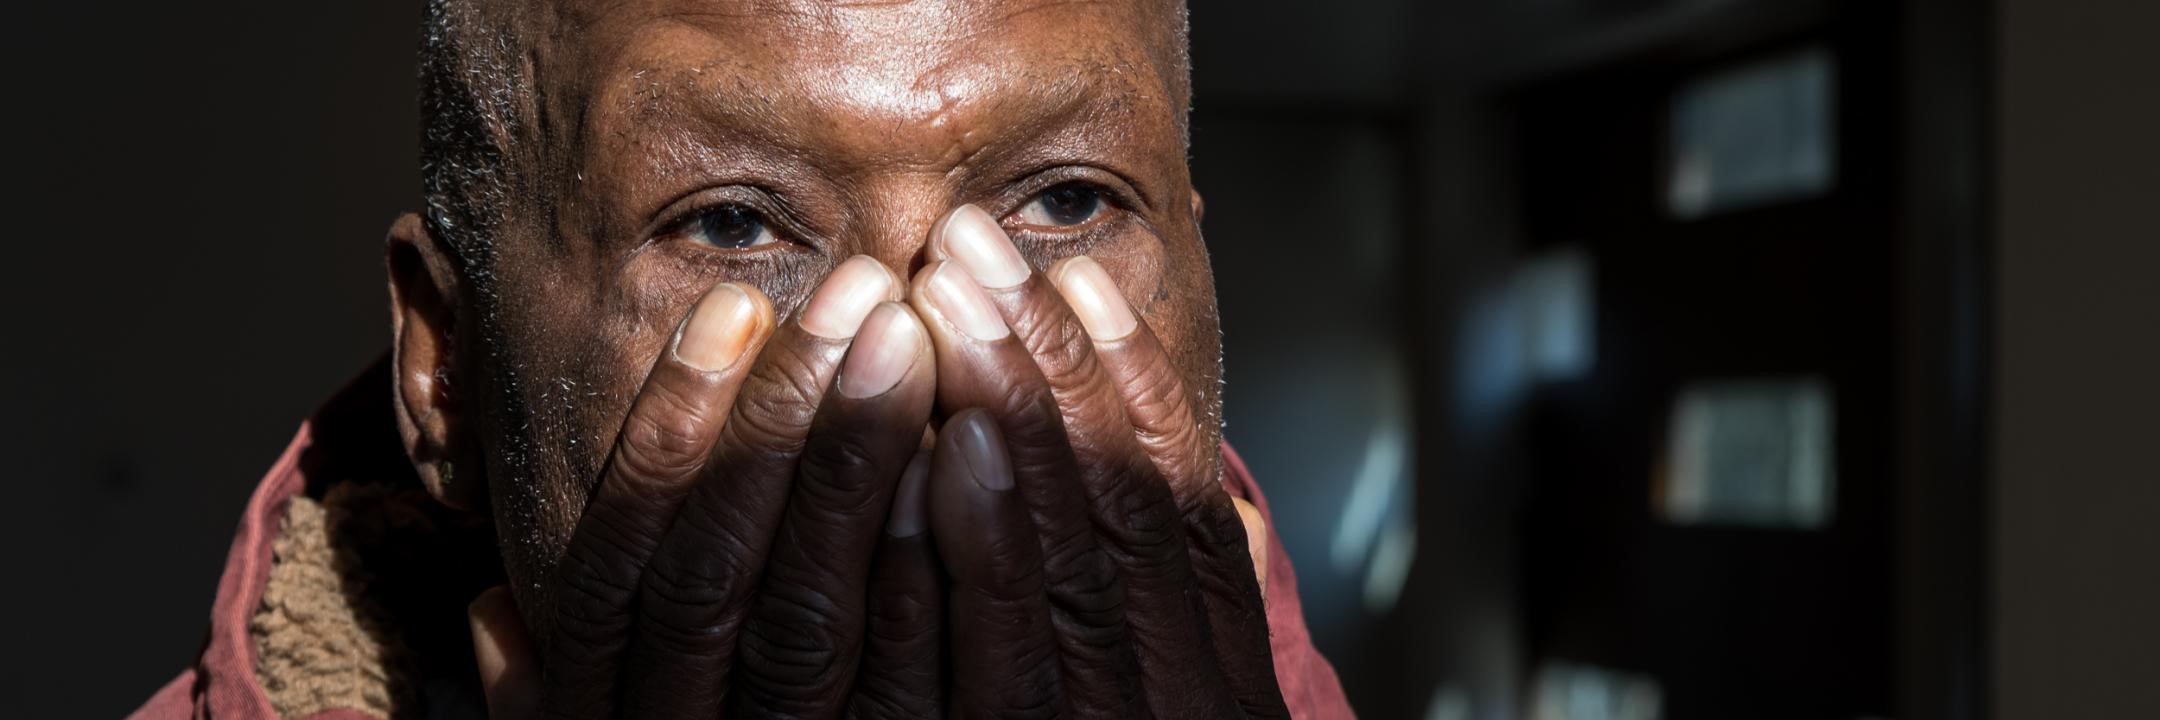 Surinaamse man na 36 jaar nog geen verblijfsvergunning